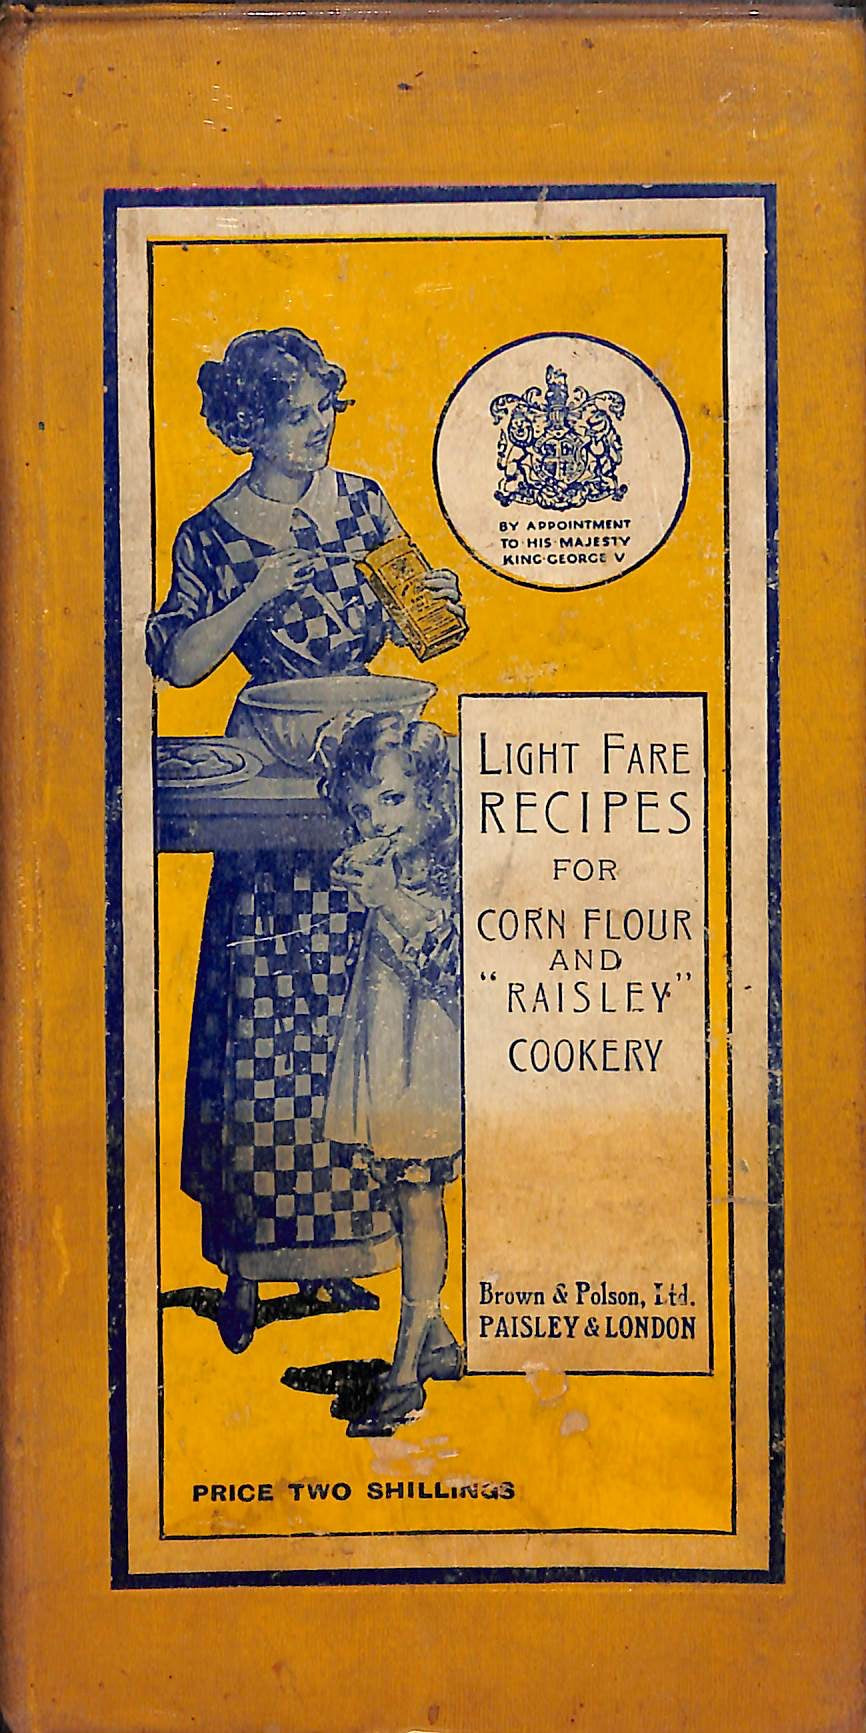 "Light Fare Recipes for Corn Flour and "Raisley" Cookery"